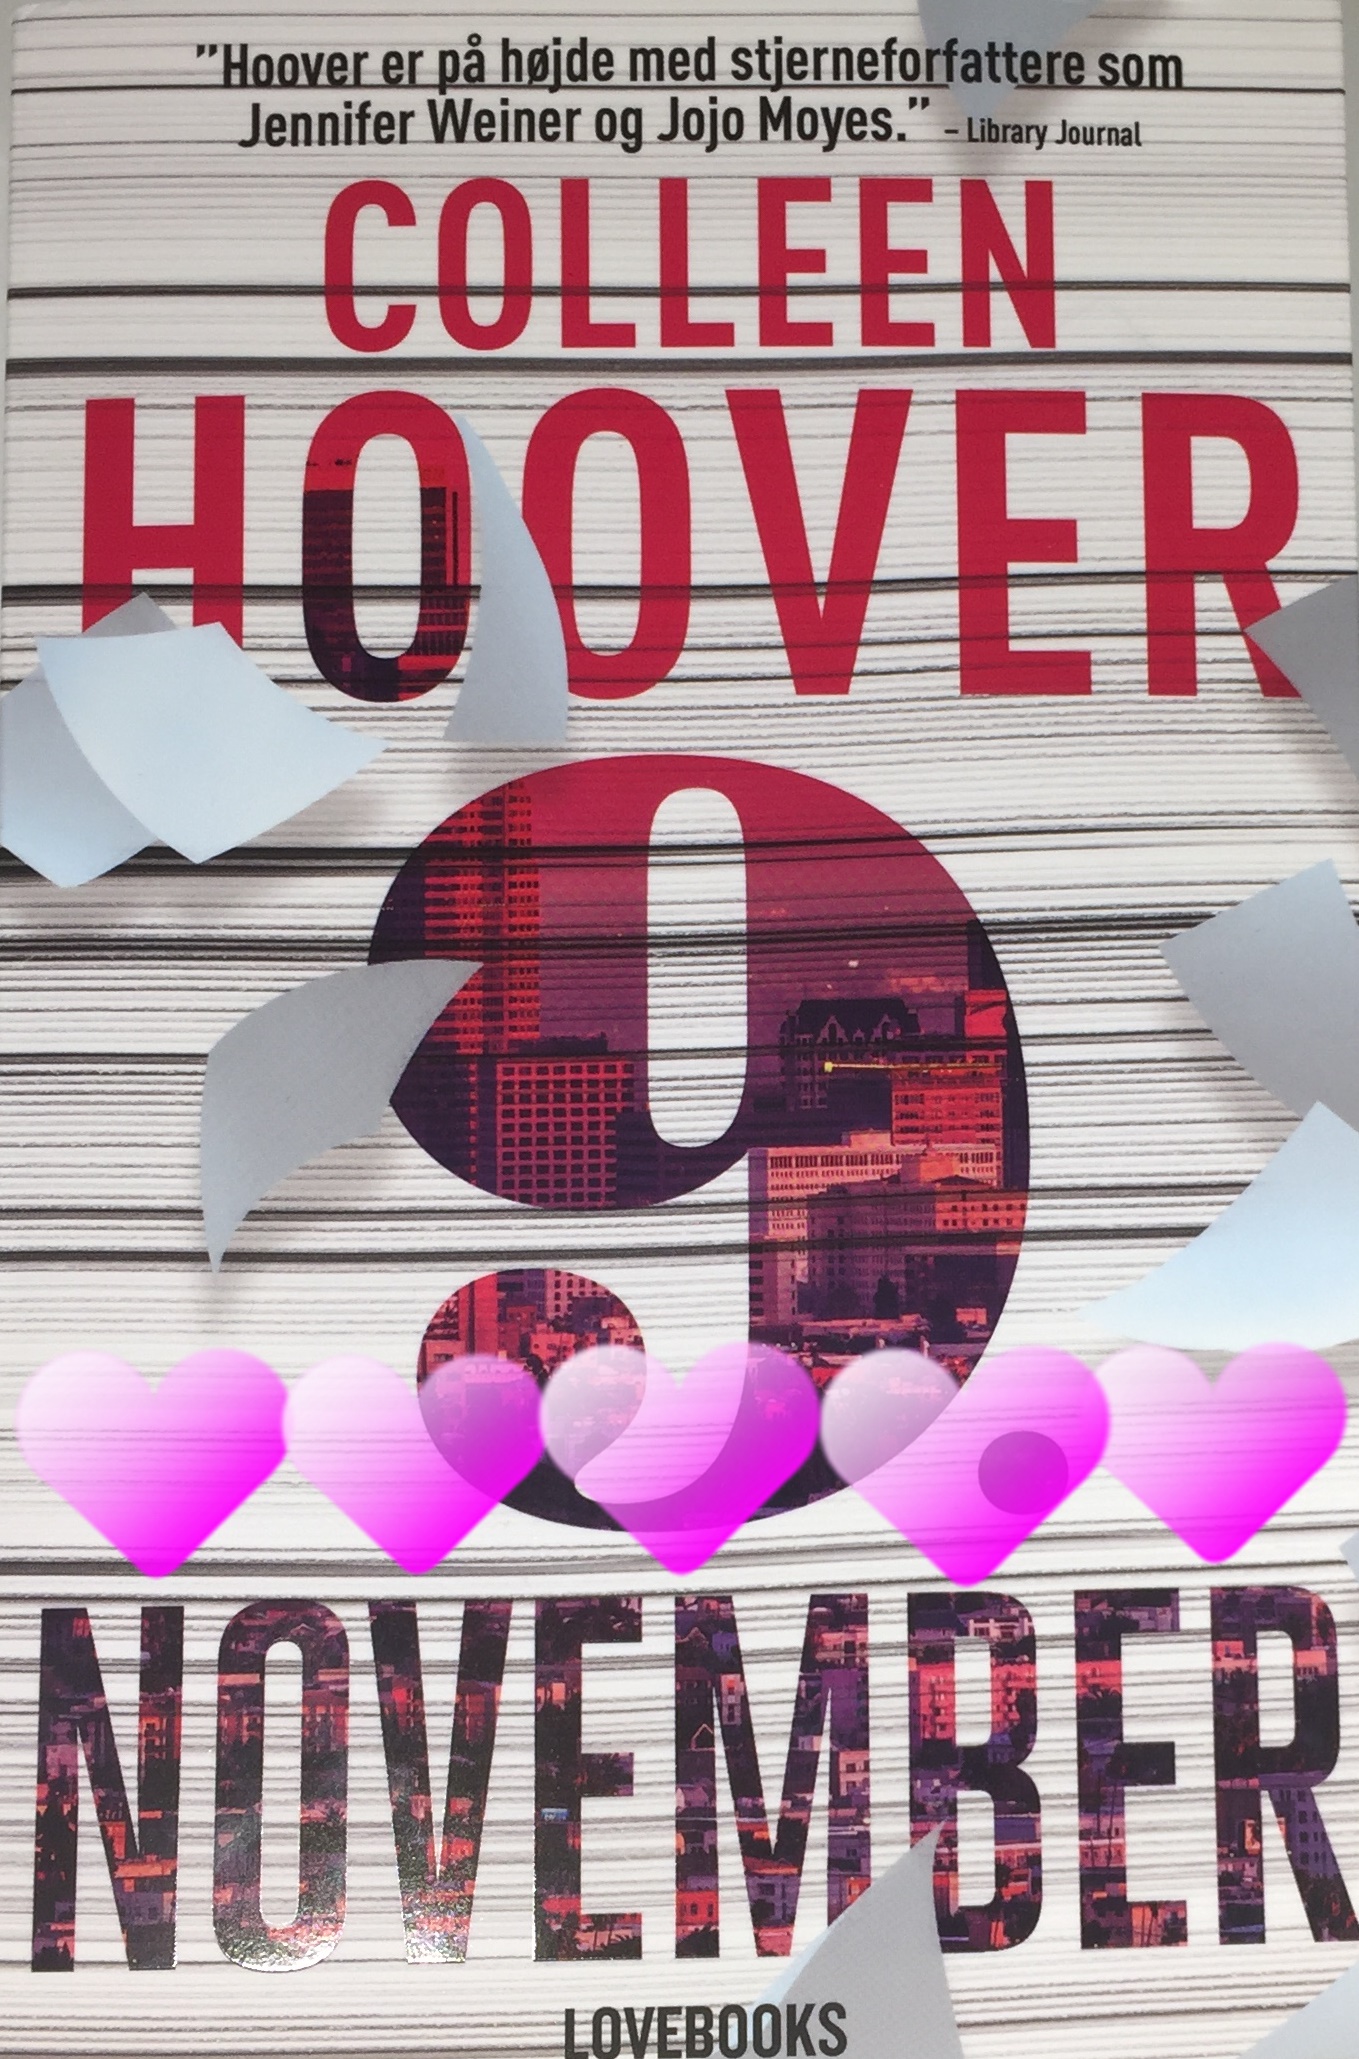 Colleen Hoover, 9. November Colleen Hoover, Krummes Krummelurer, Anmeldelse, Boganmeldelse 9. November, Boganmeldelse Colleen Hoover, Lindhardt og Ringhof, LoveBooks, Egmont